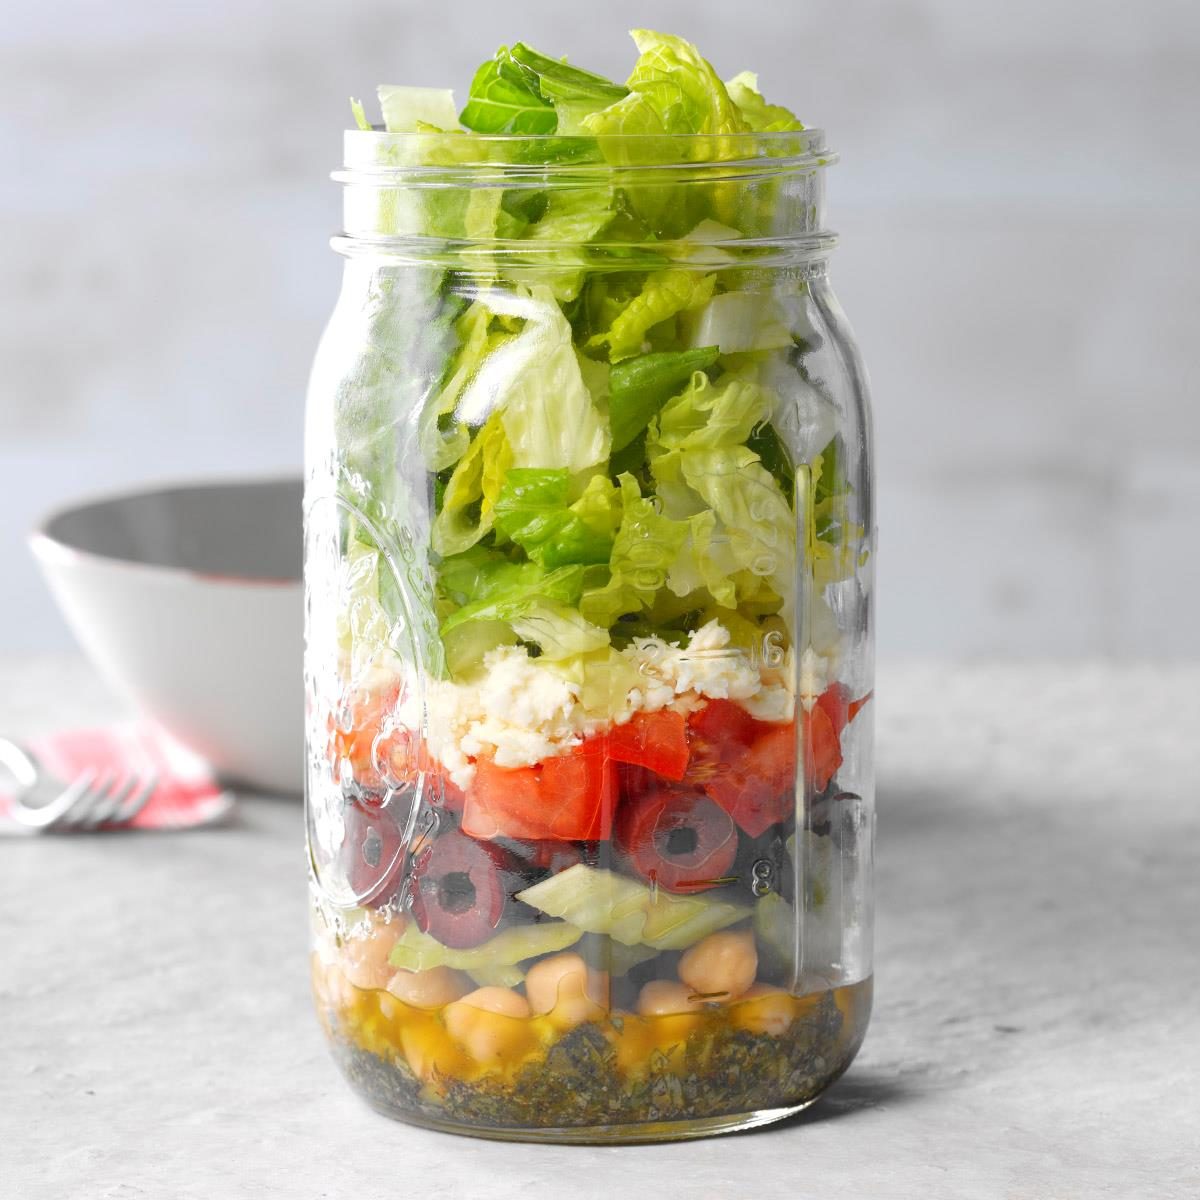 https://www.tasteofhome.com/wp-content/uploads/2018/05/Chopped-Greek-Salad-in-a-Jar_EXPS_MTCBBZ18_224336_D02_28__3b-1.jpg